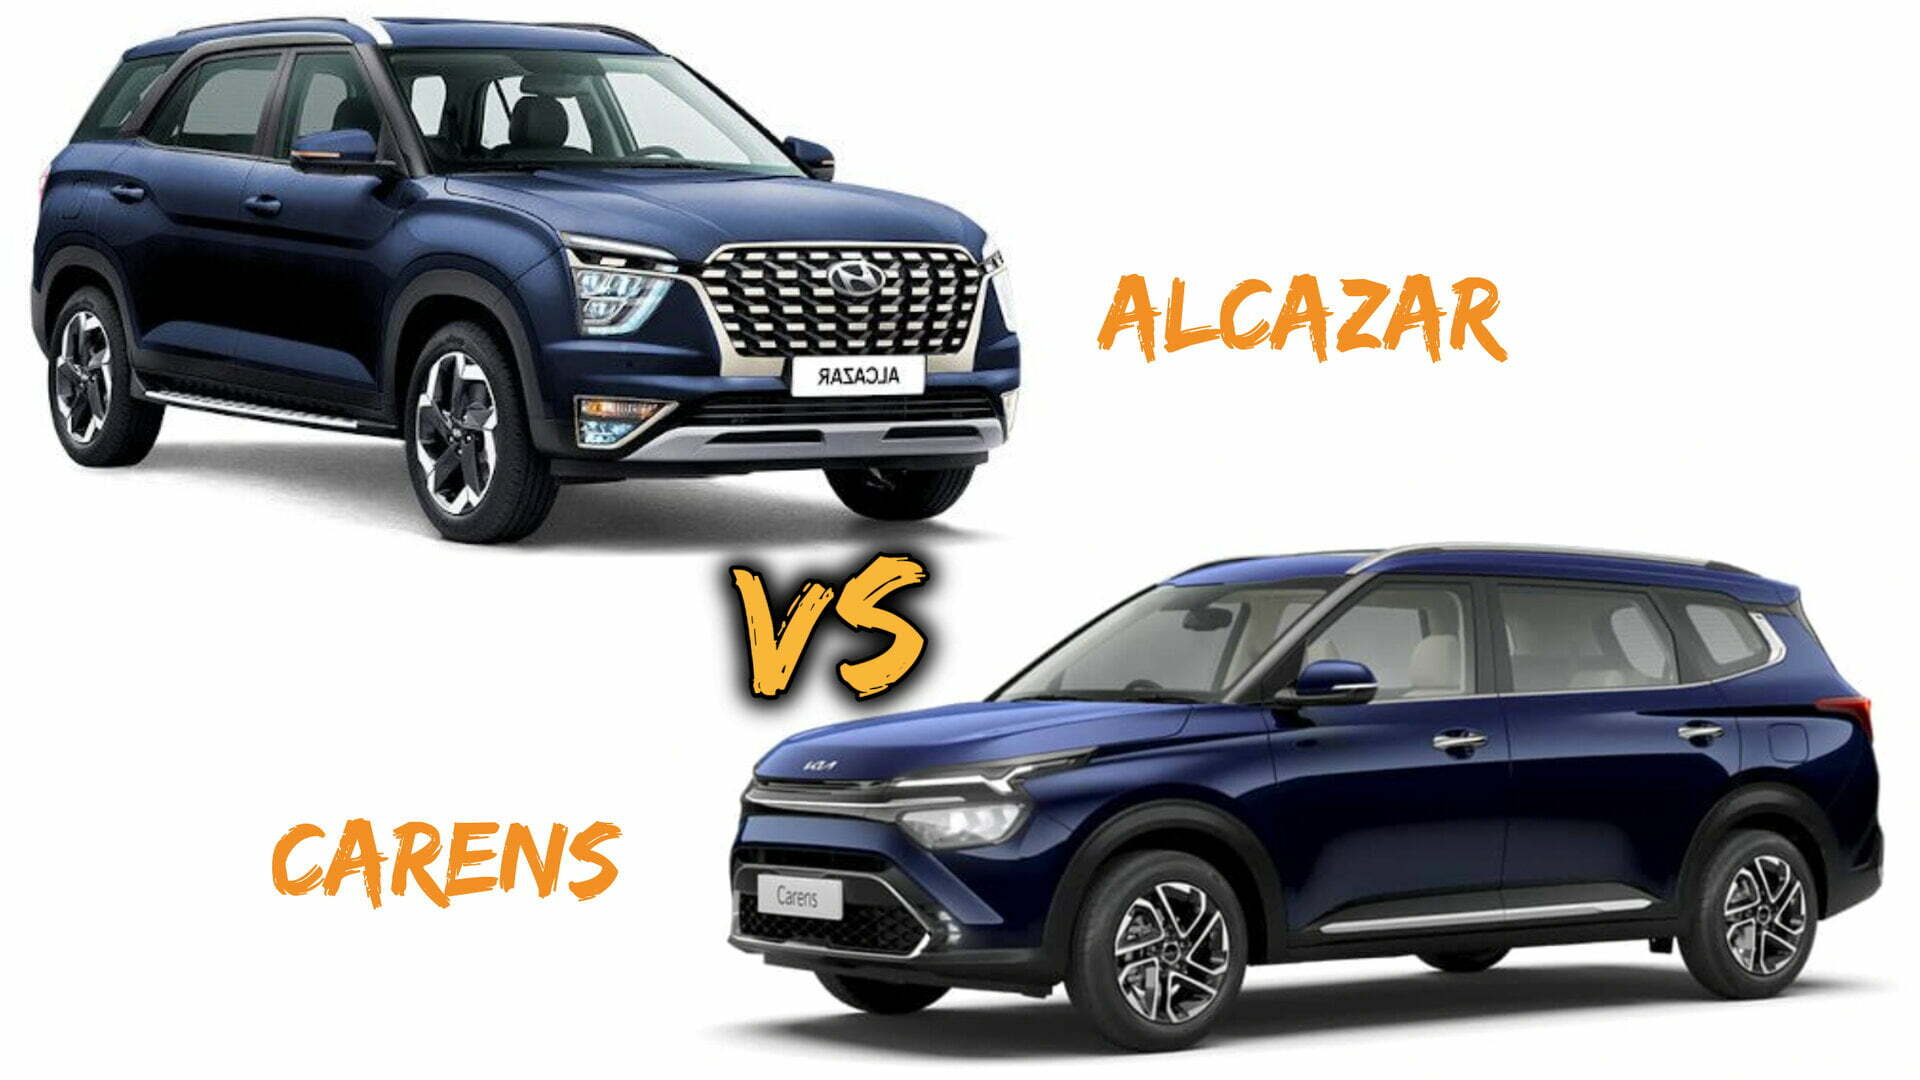 Kia Carens vs Hyundai Alcazar